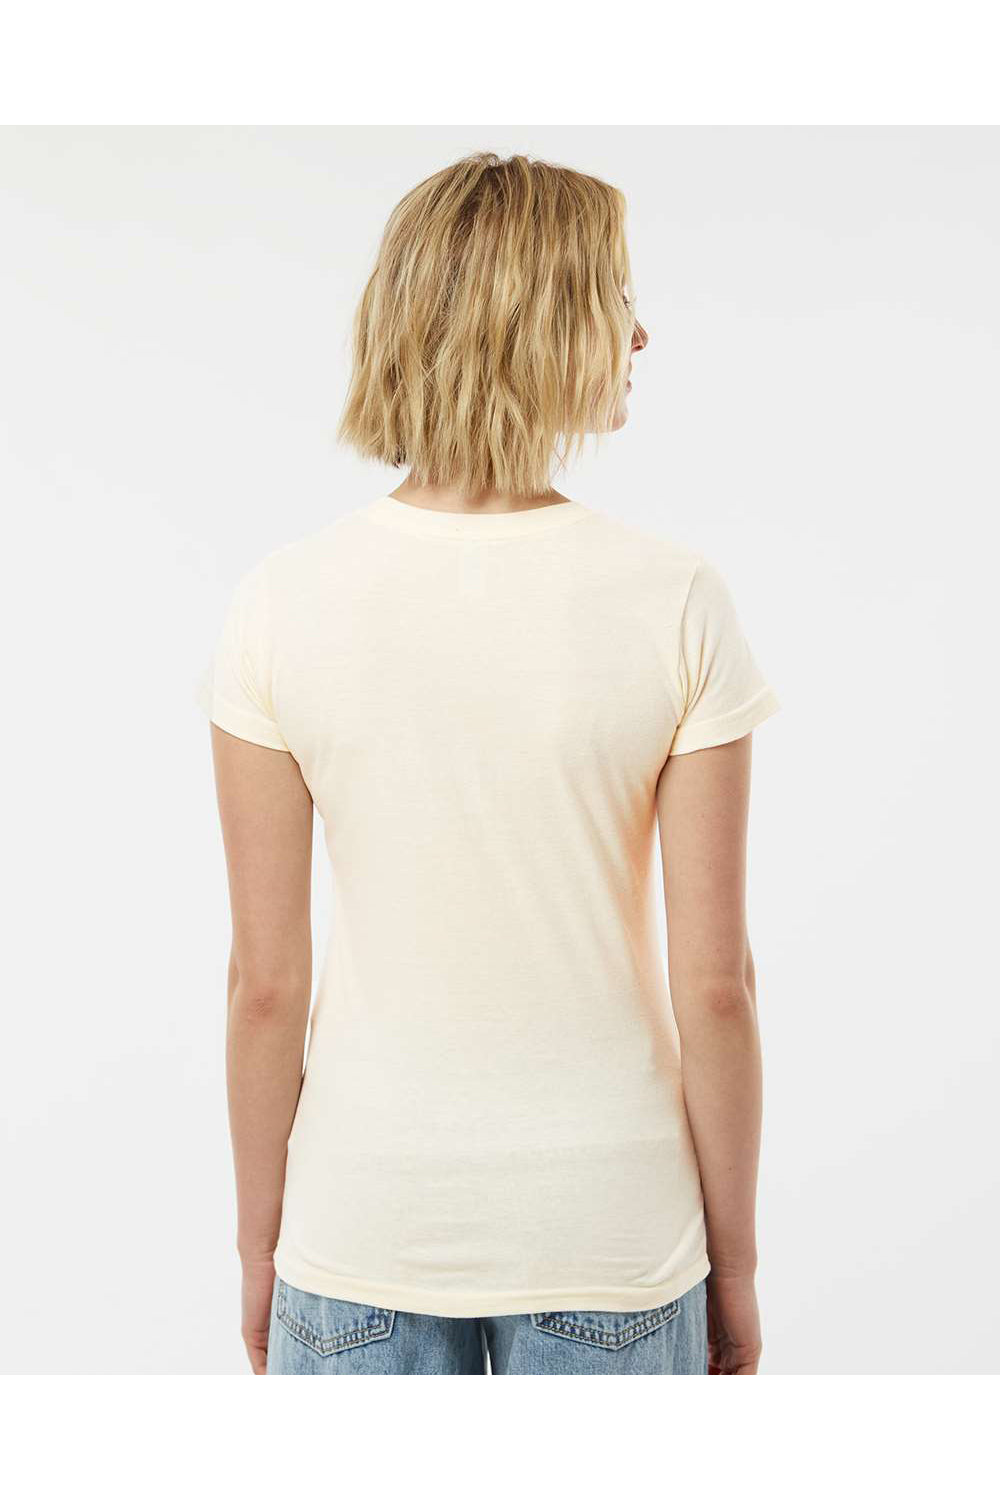 Tultex 213 Womens Fine Jersey Slim Fit Short Sleeve Crewneck T-Shirt Natural Model Back